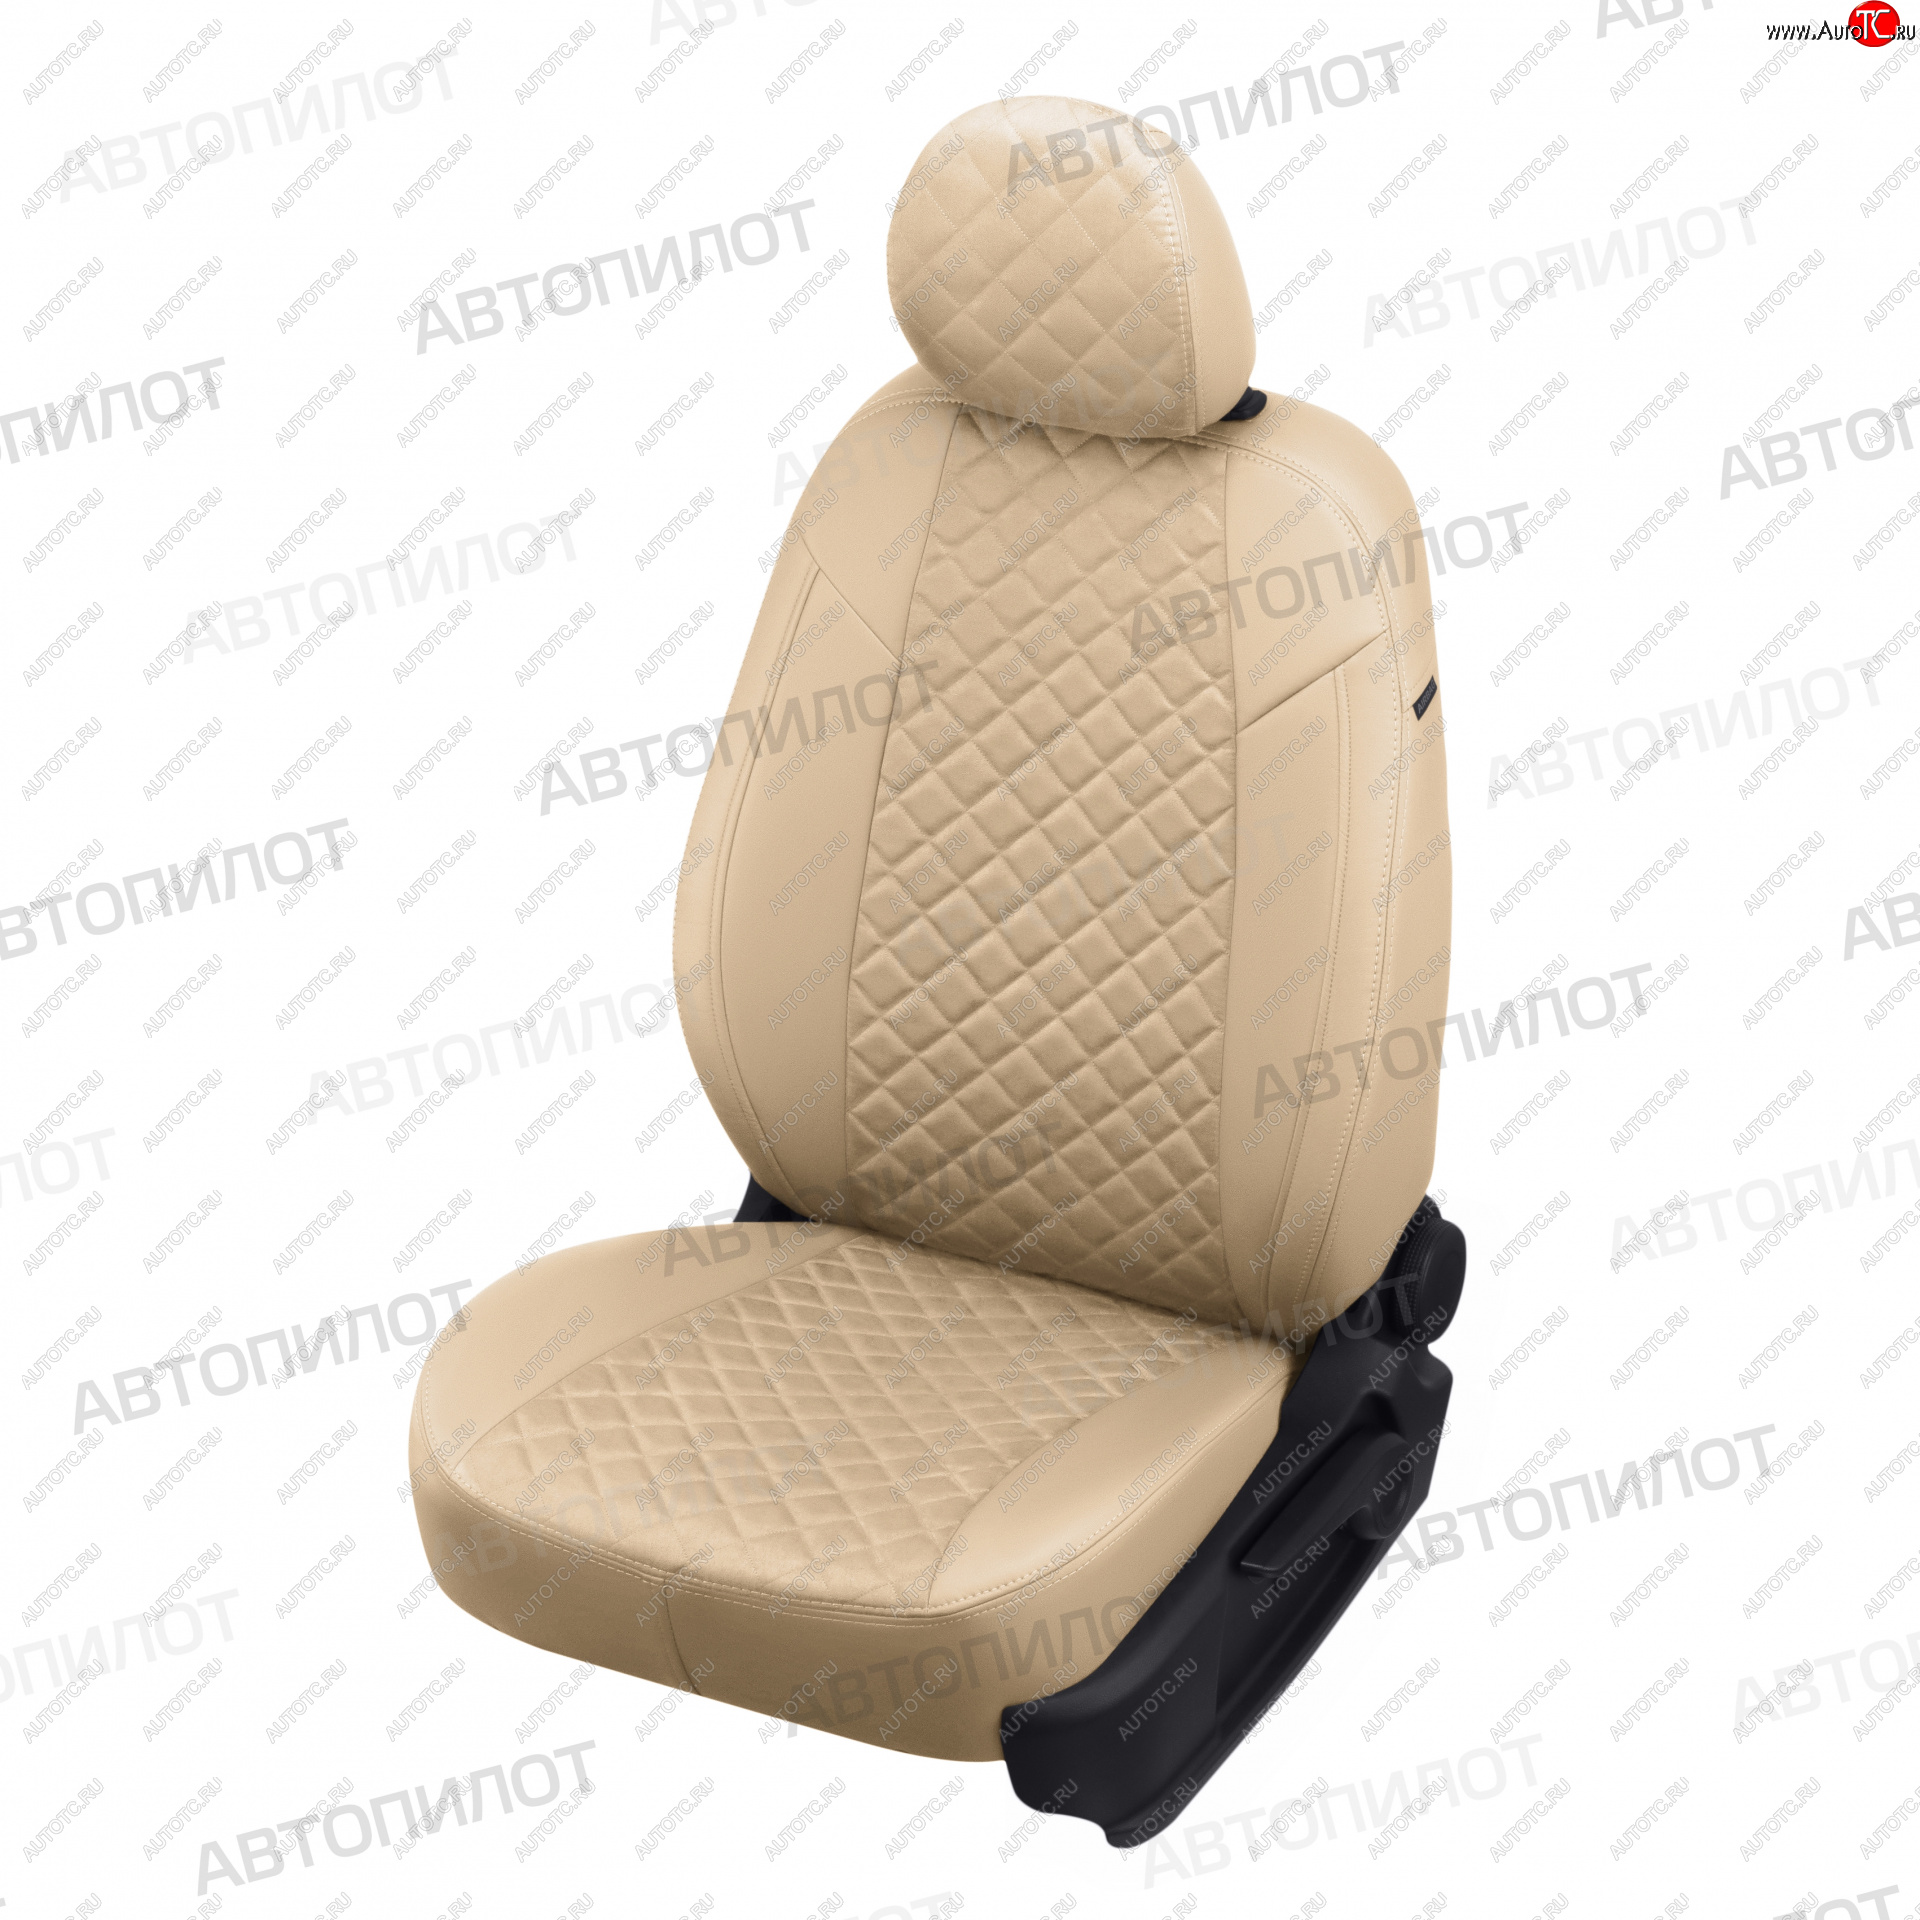 13 999 р. Чехлы сидений (экокожа/алькантара) Автопилот Ромб  Hyundai Santa Fe  3 DM (2012-2019) (бежевый)